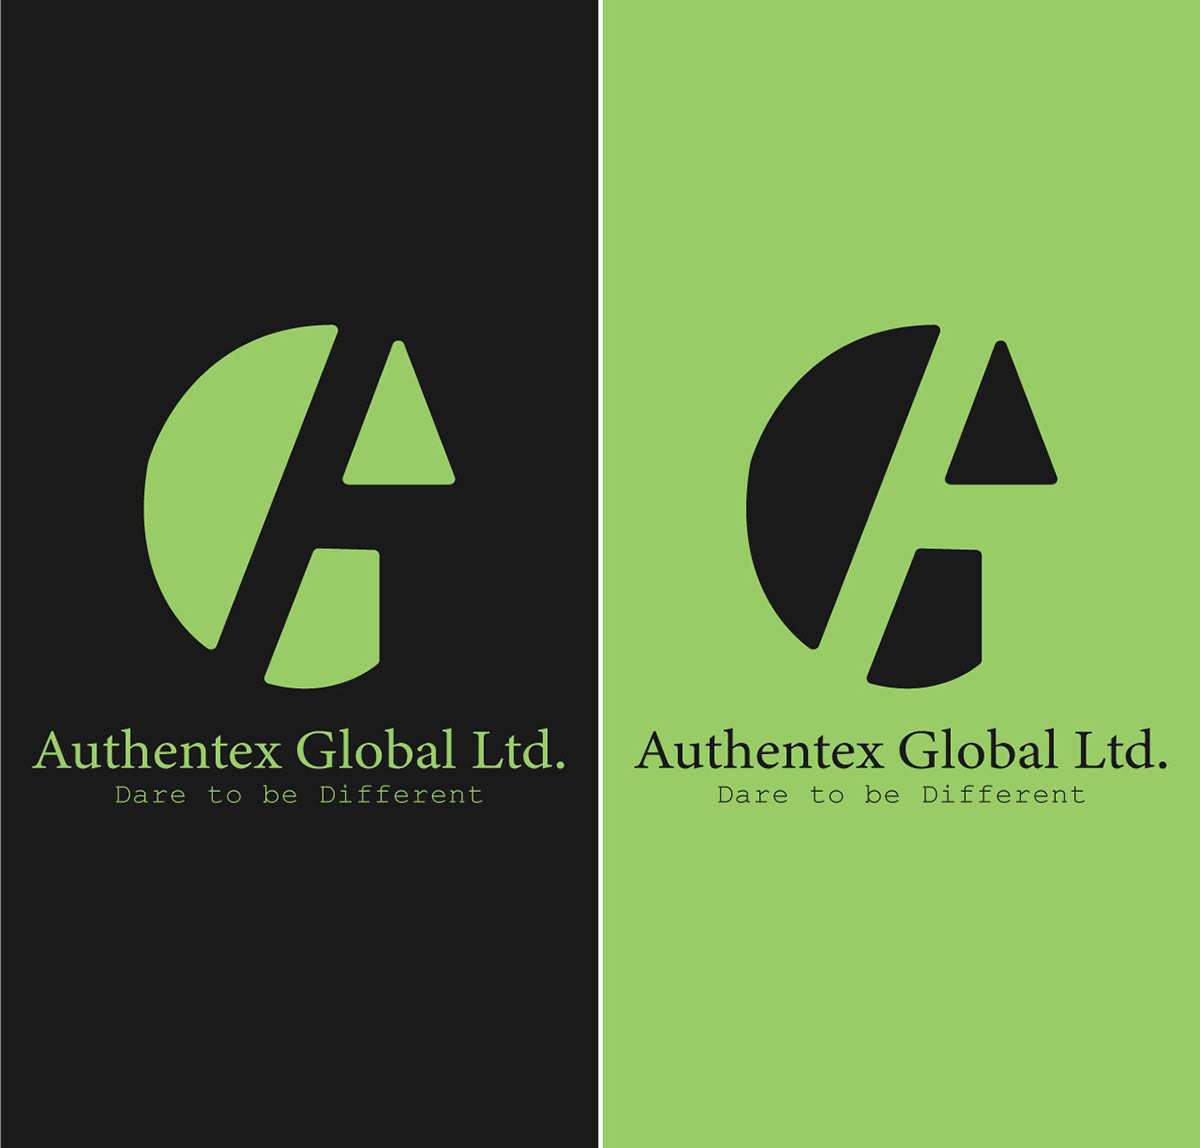 Logo Design brand identity design Athentex Poster Design Social media post Advertising  marketing   visual identity Logotype